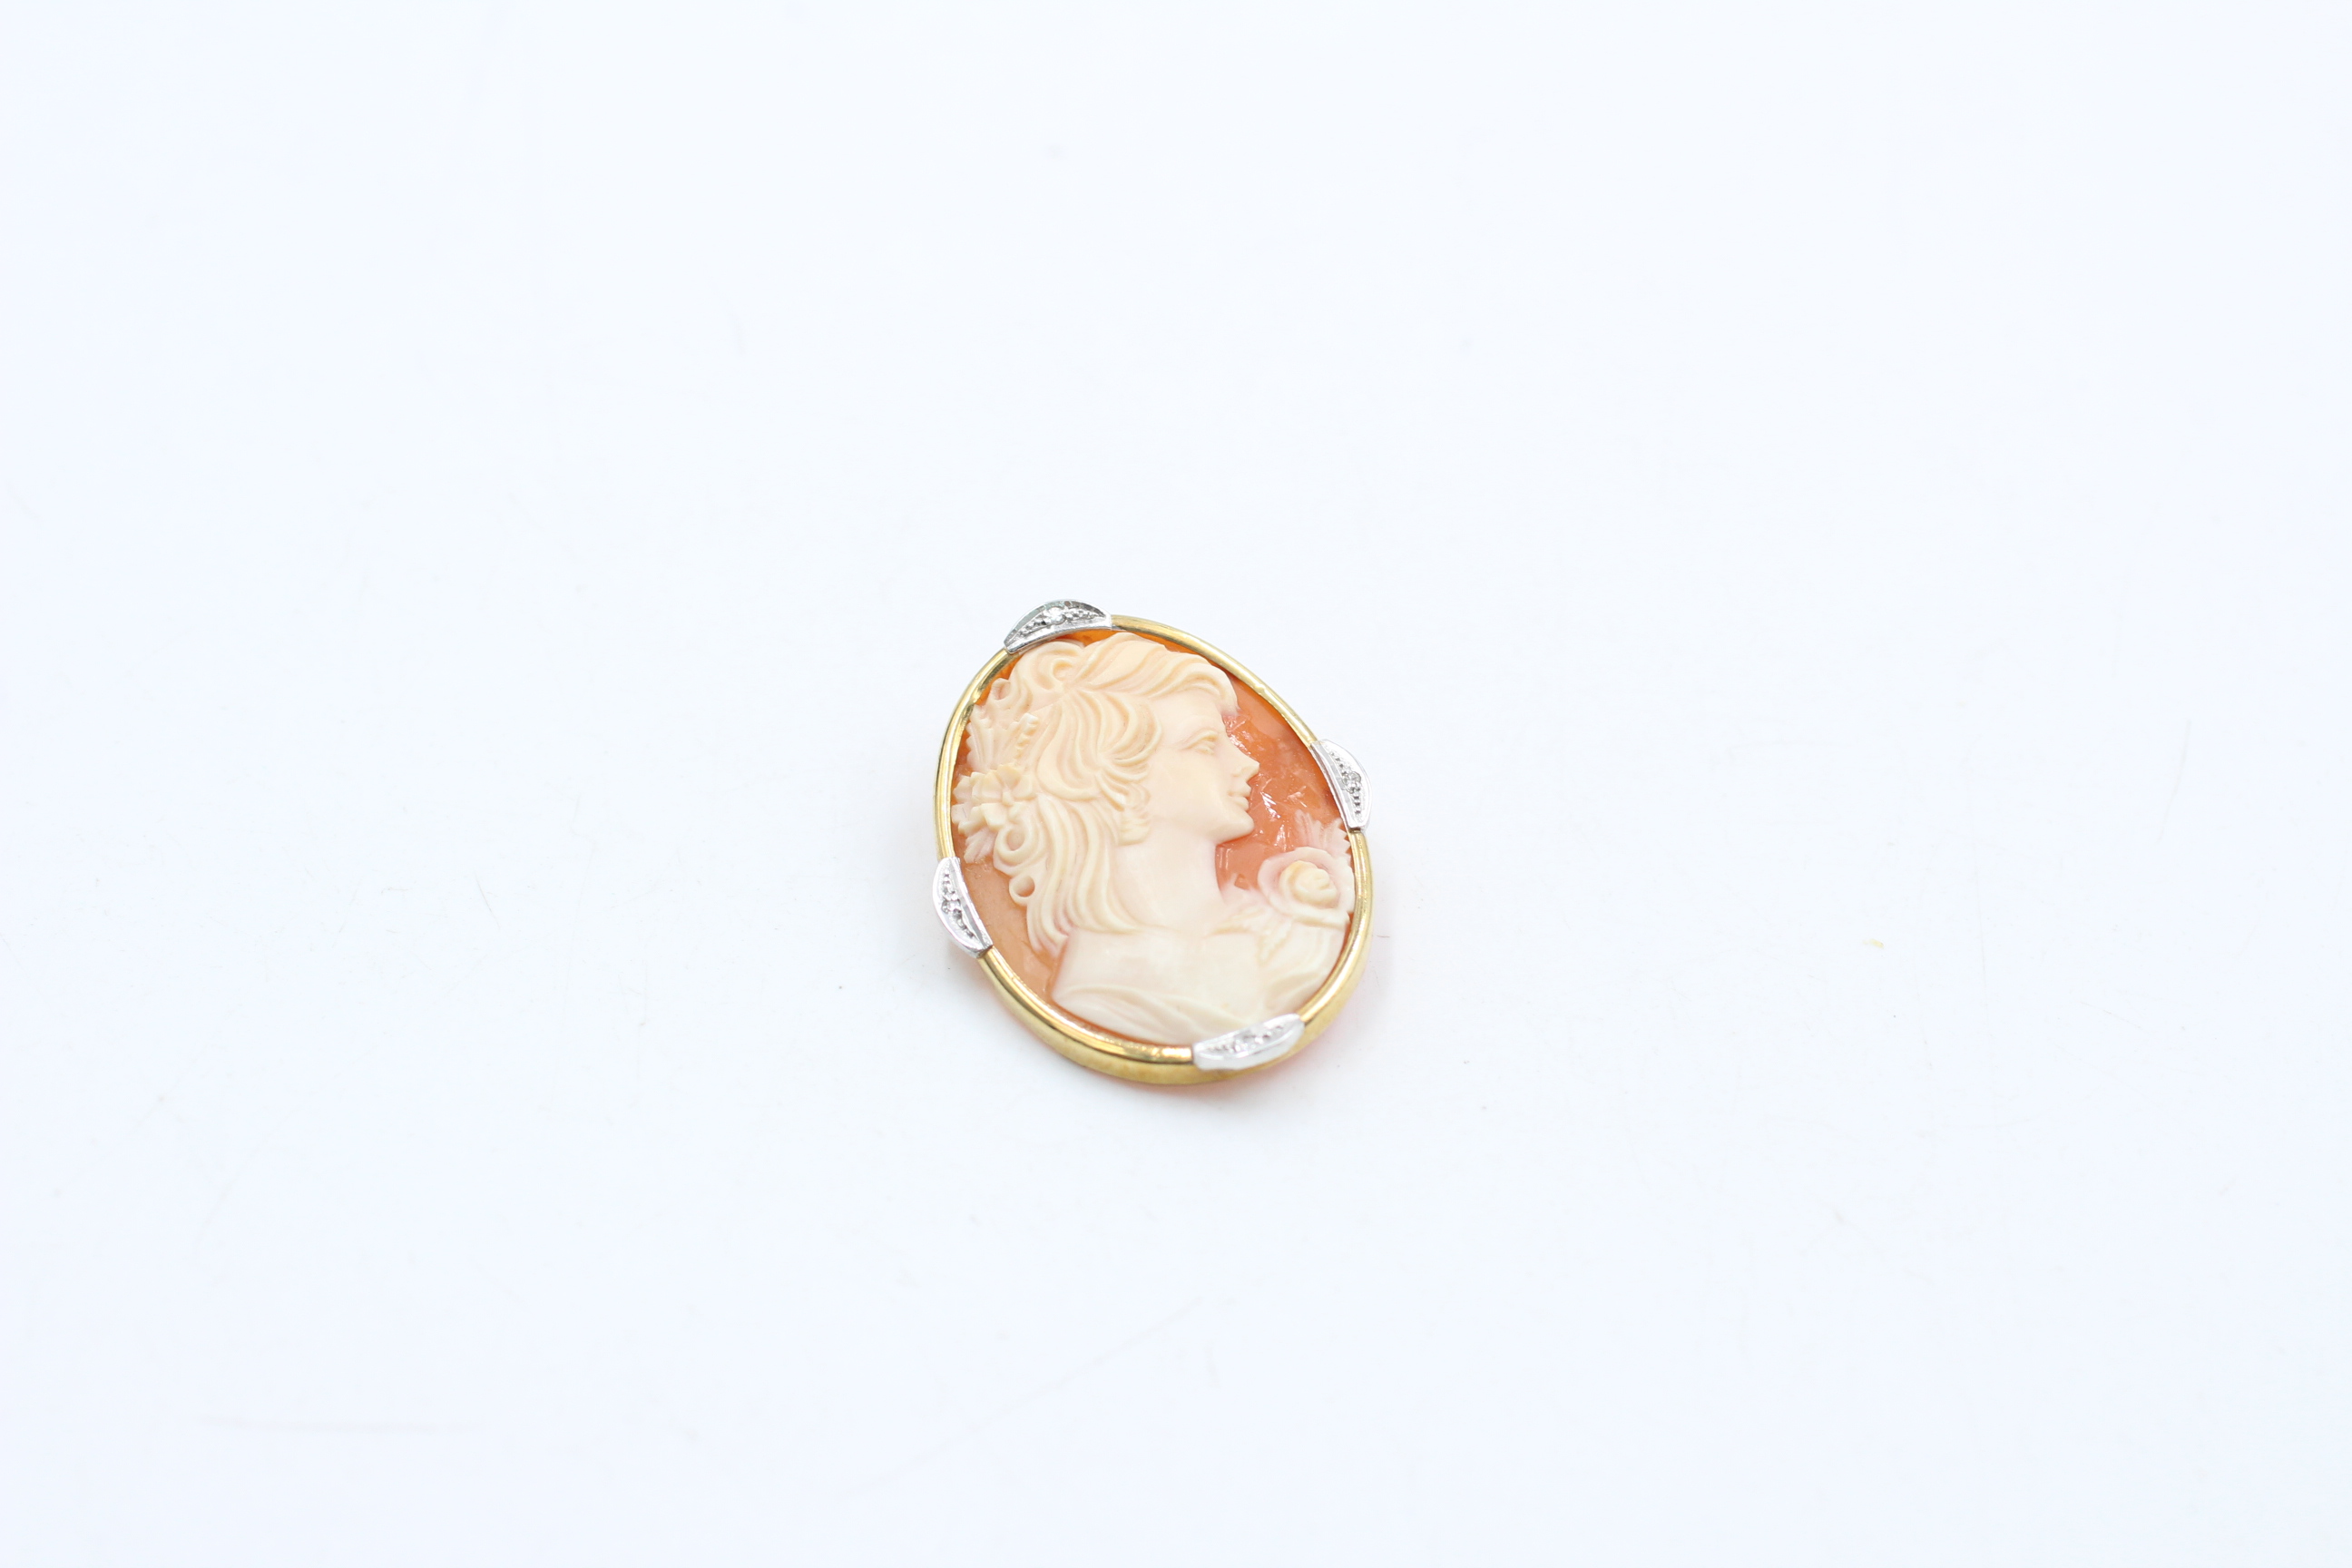 9ct gold diamond cameo brooch (5.8g) - Image 2 of 4